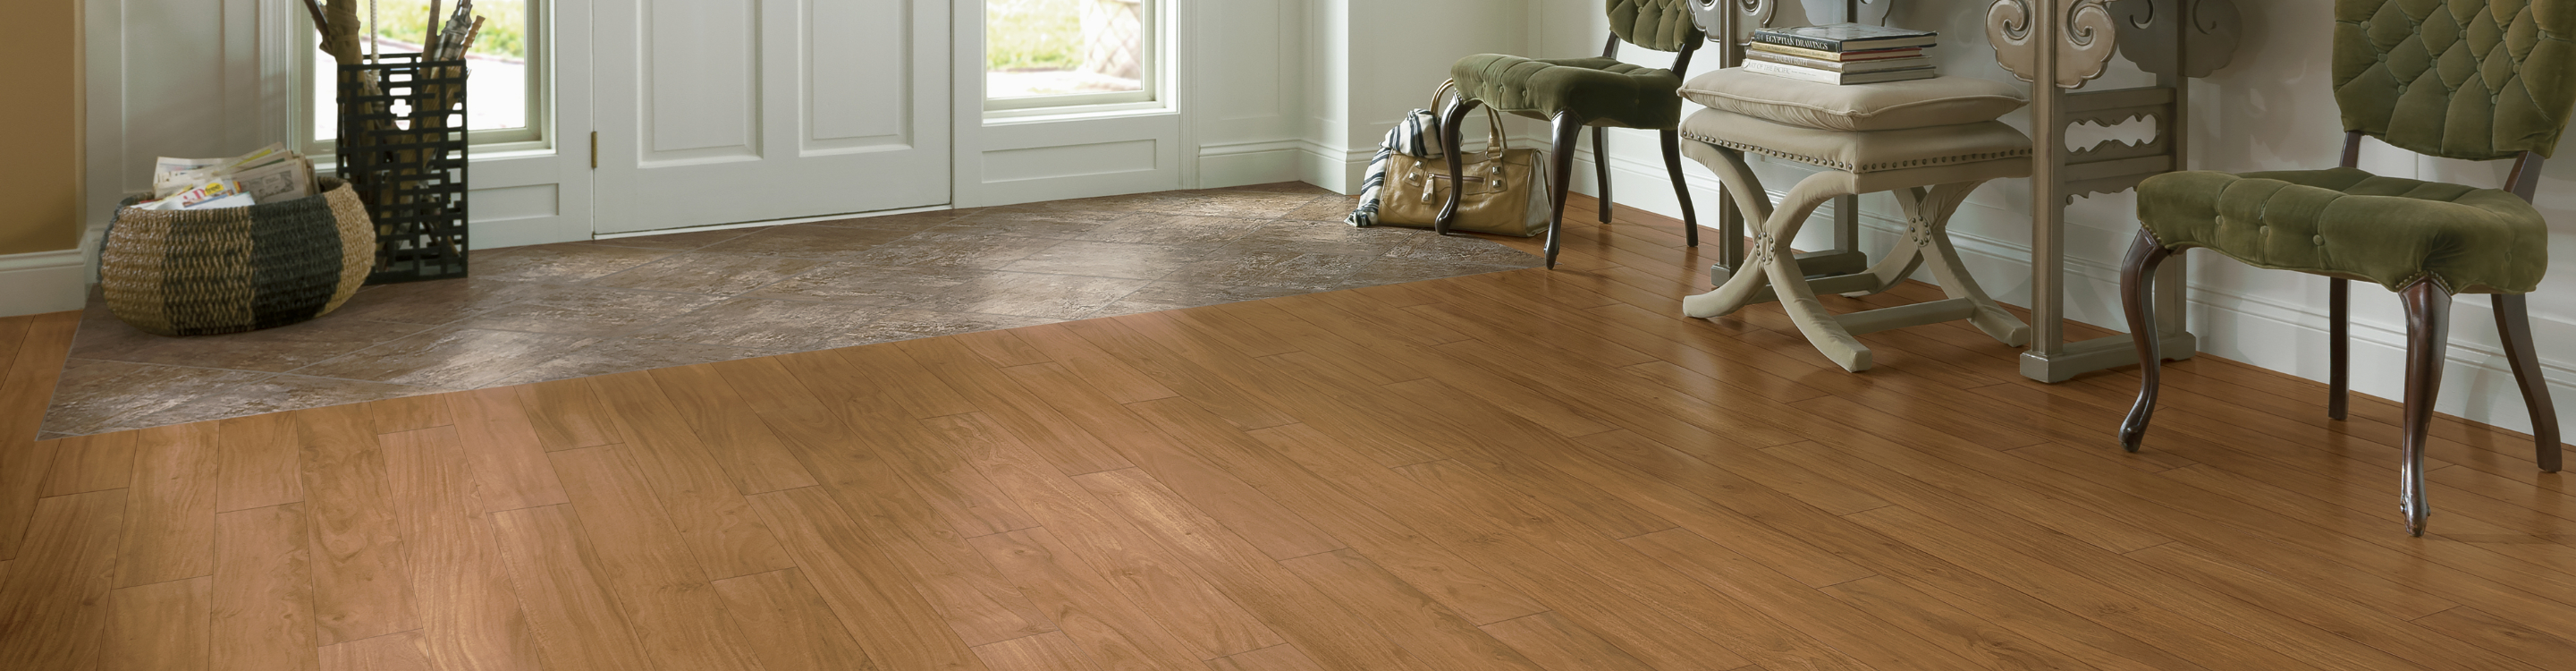 oak colored luxury vinyl floors